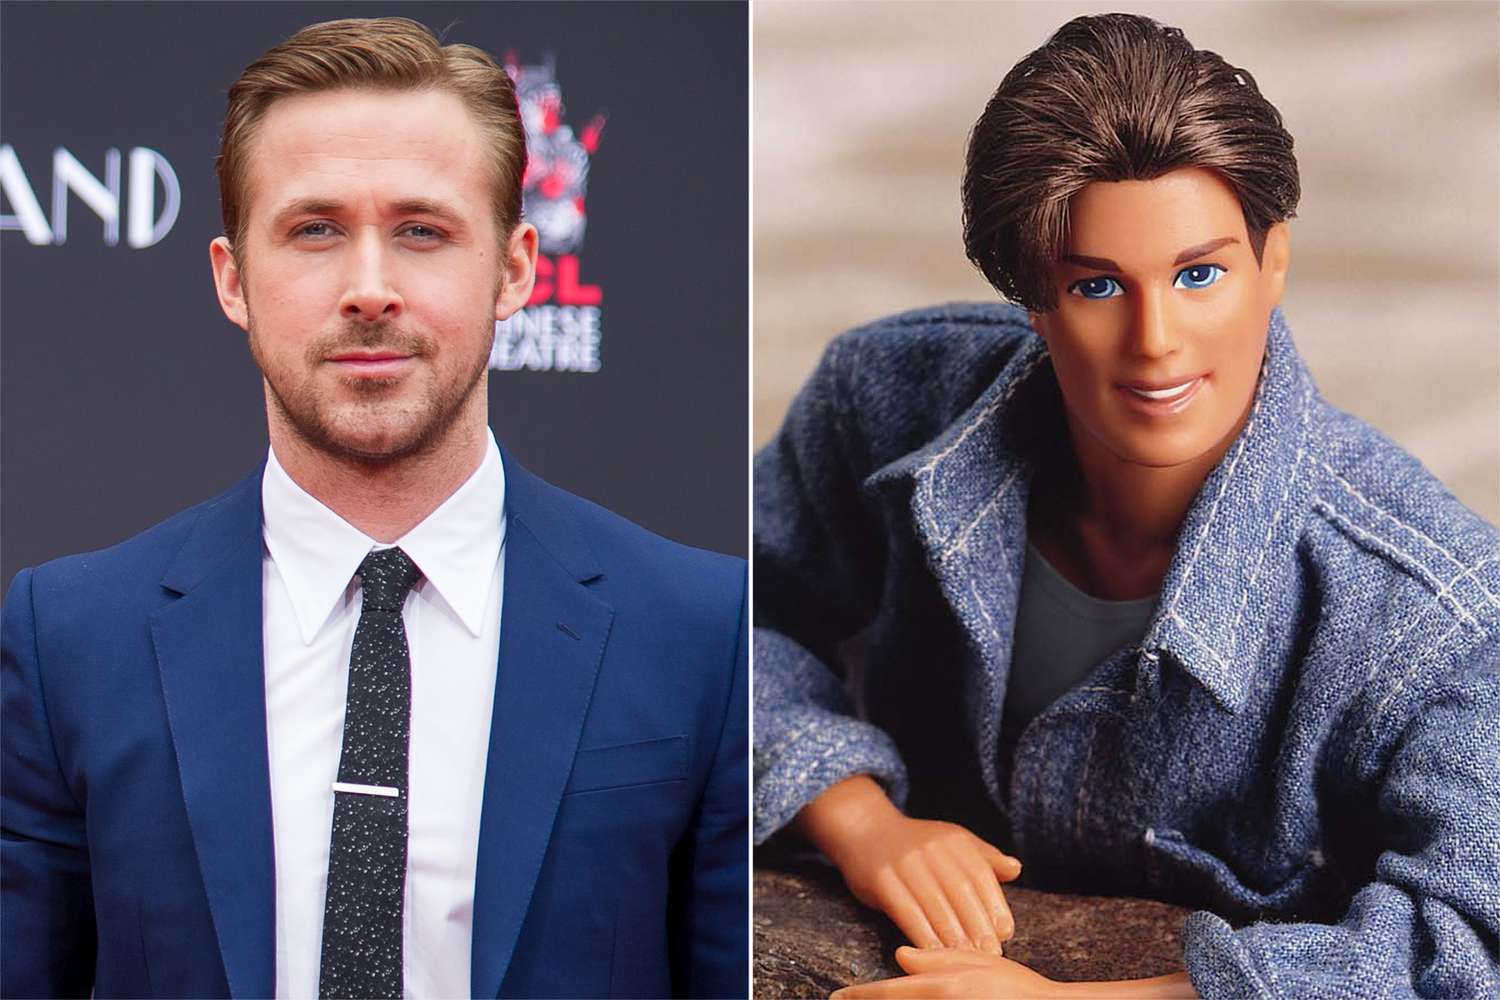 Ryan Gosling to play Ken opposite Margot Robbie in Barbie movie | EW.com